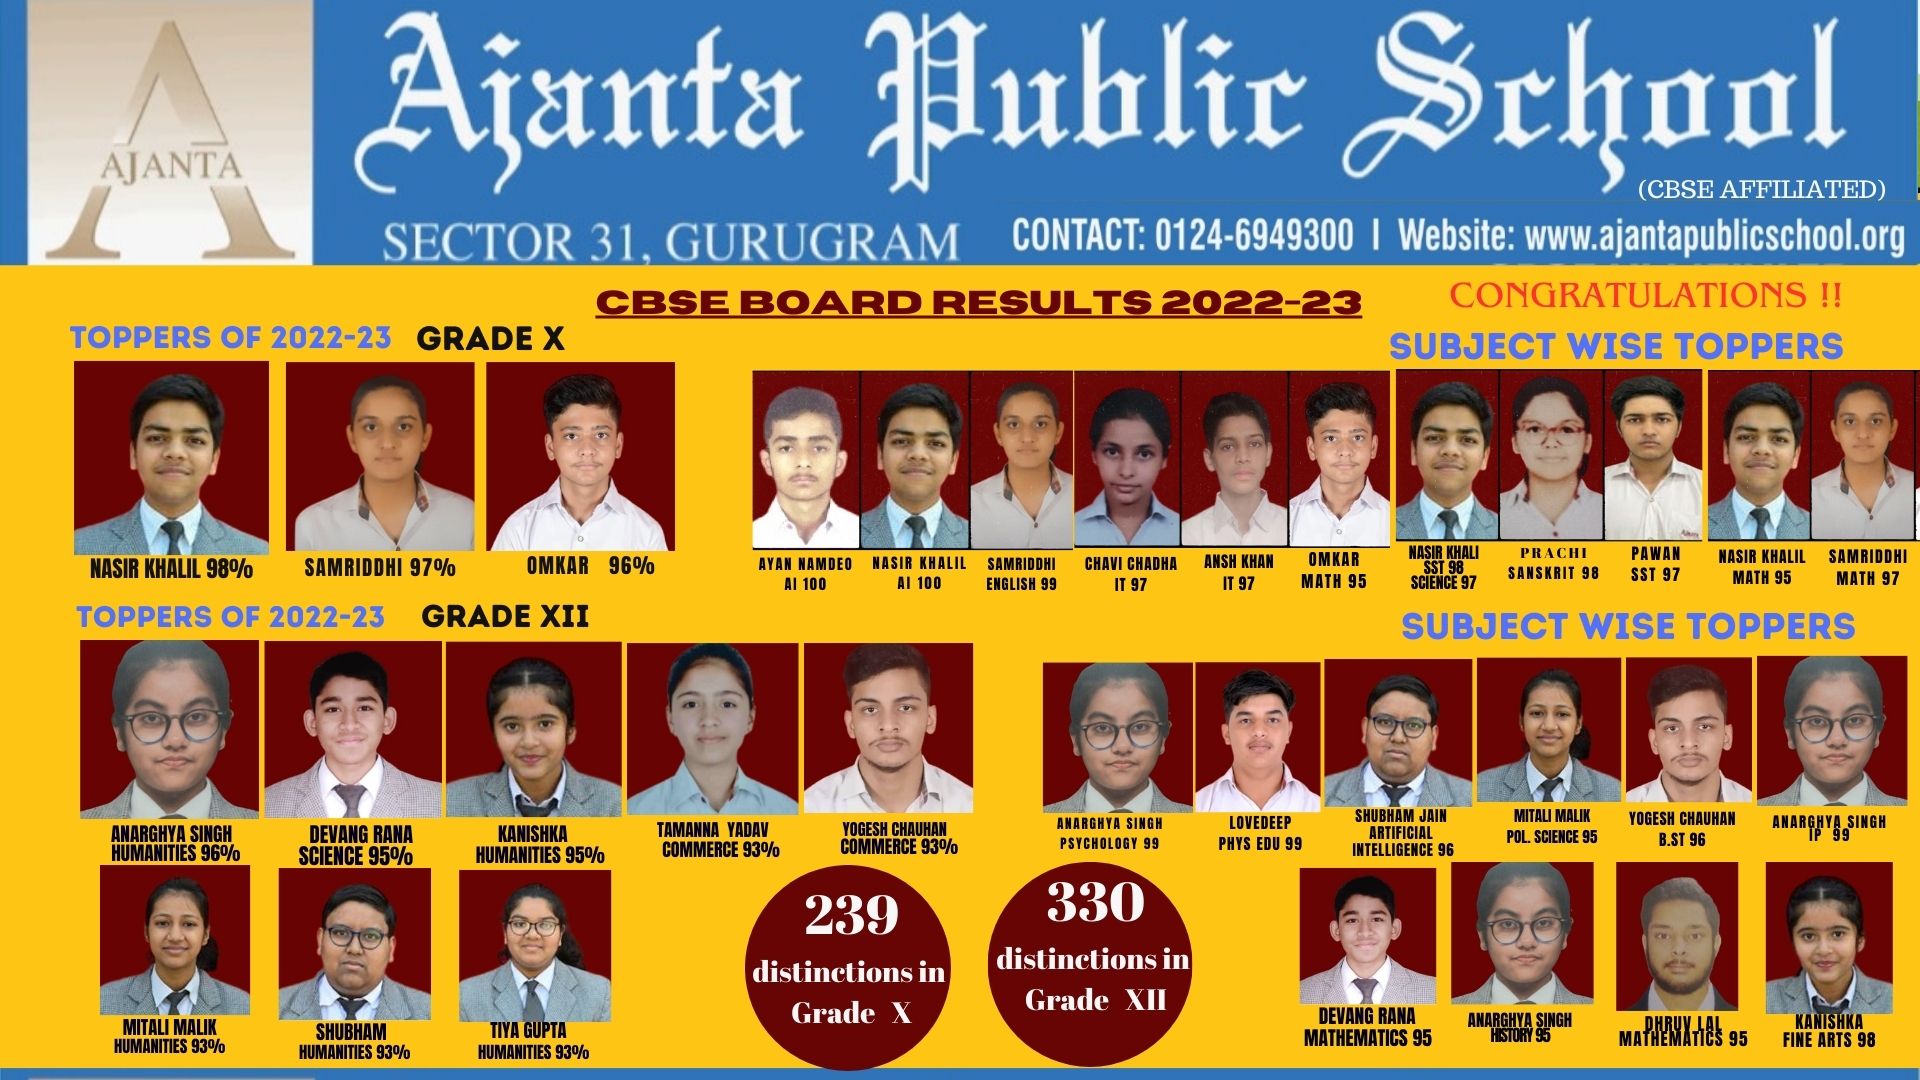 Phenomenal Triumph in CBSE Board Result By Class XII Students of Ajanta Public School, Top 10 School of Gurugram